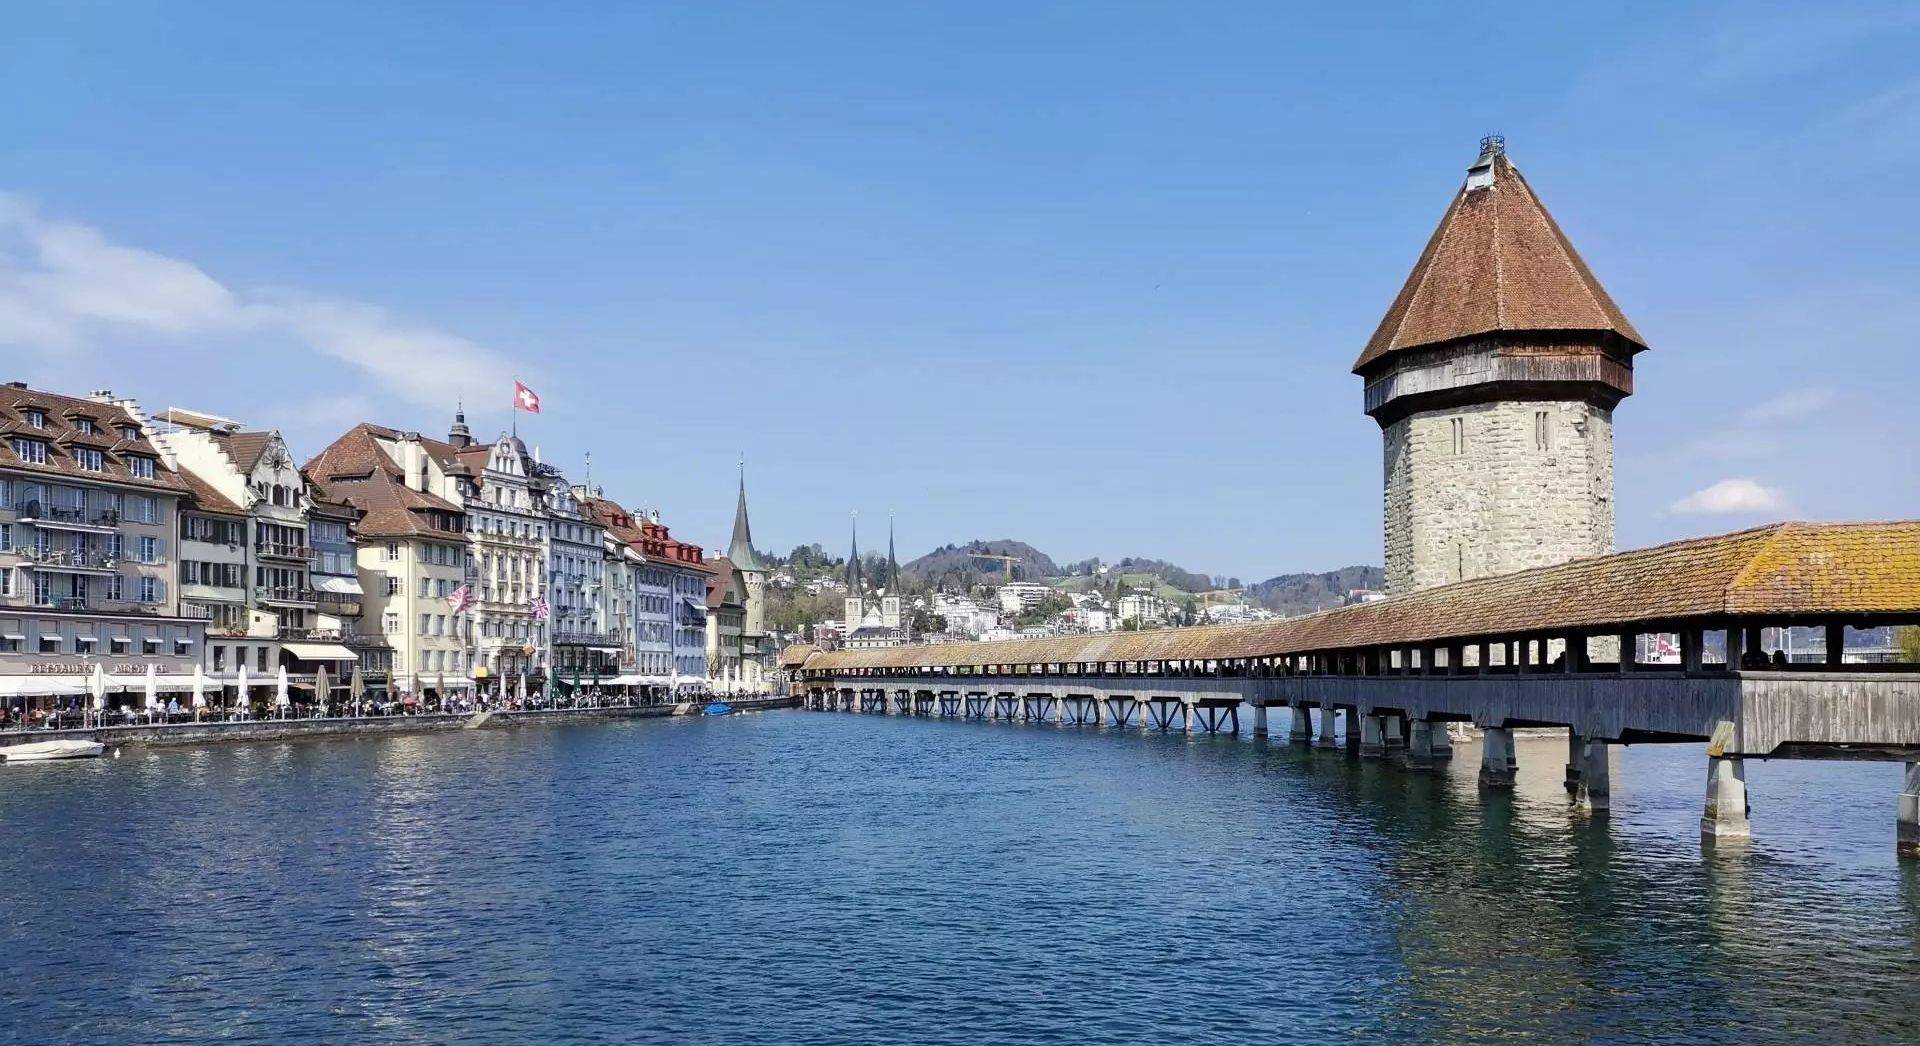 Harbor in Lucerne